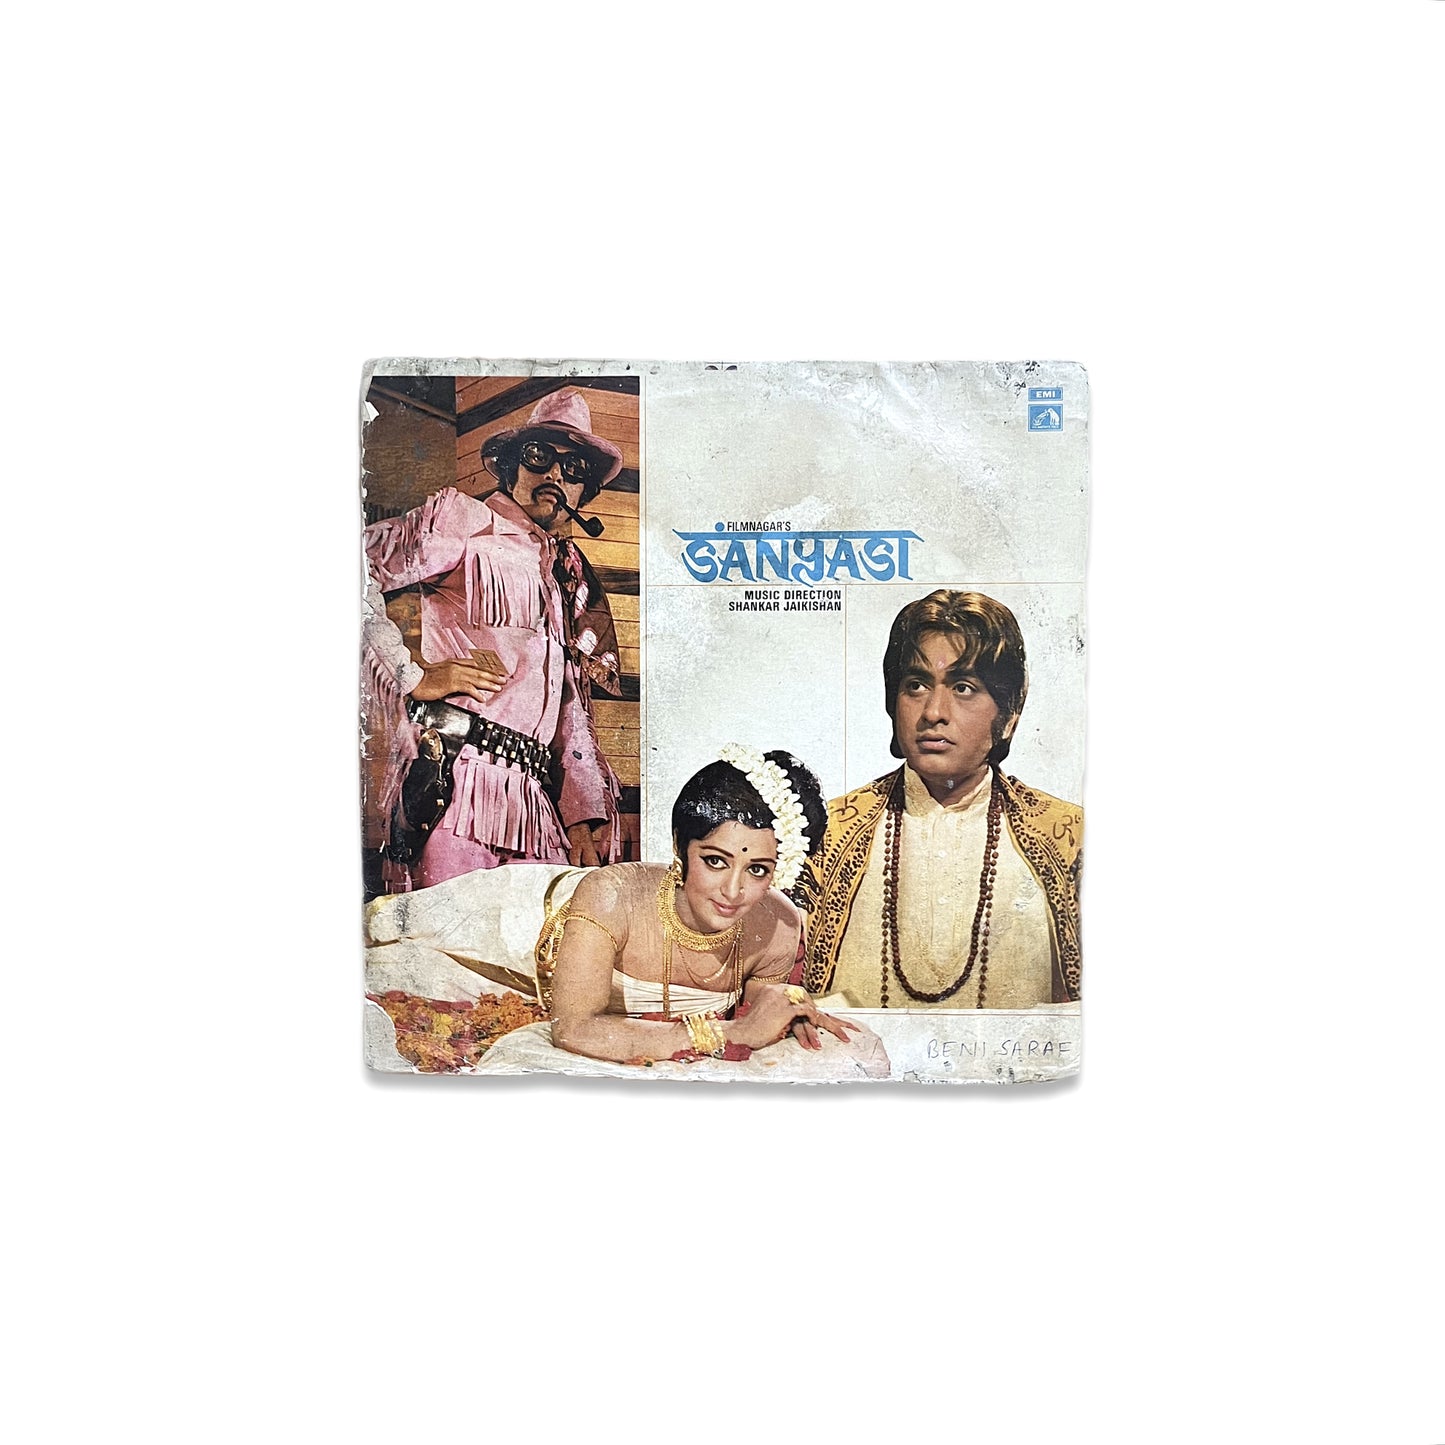 'SANYASI' - VINTAGE VINYL LP RECORD 1975